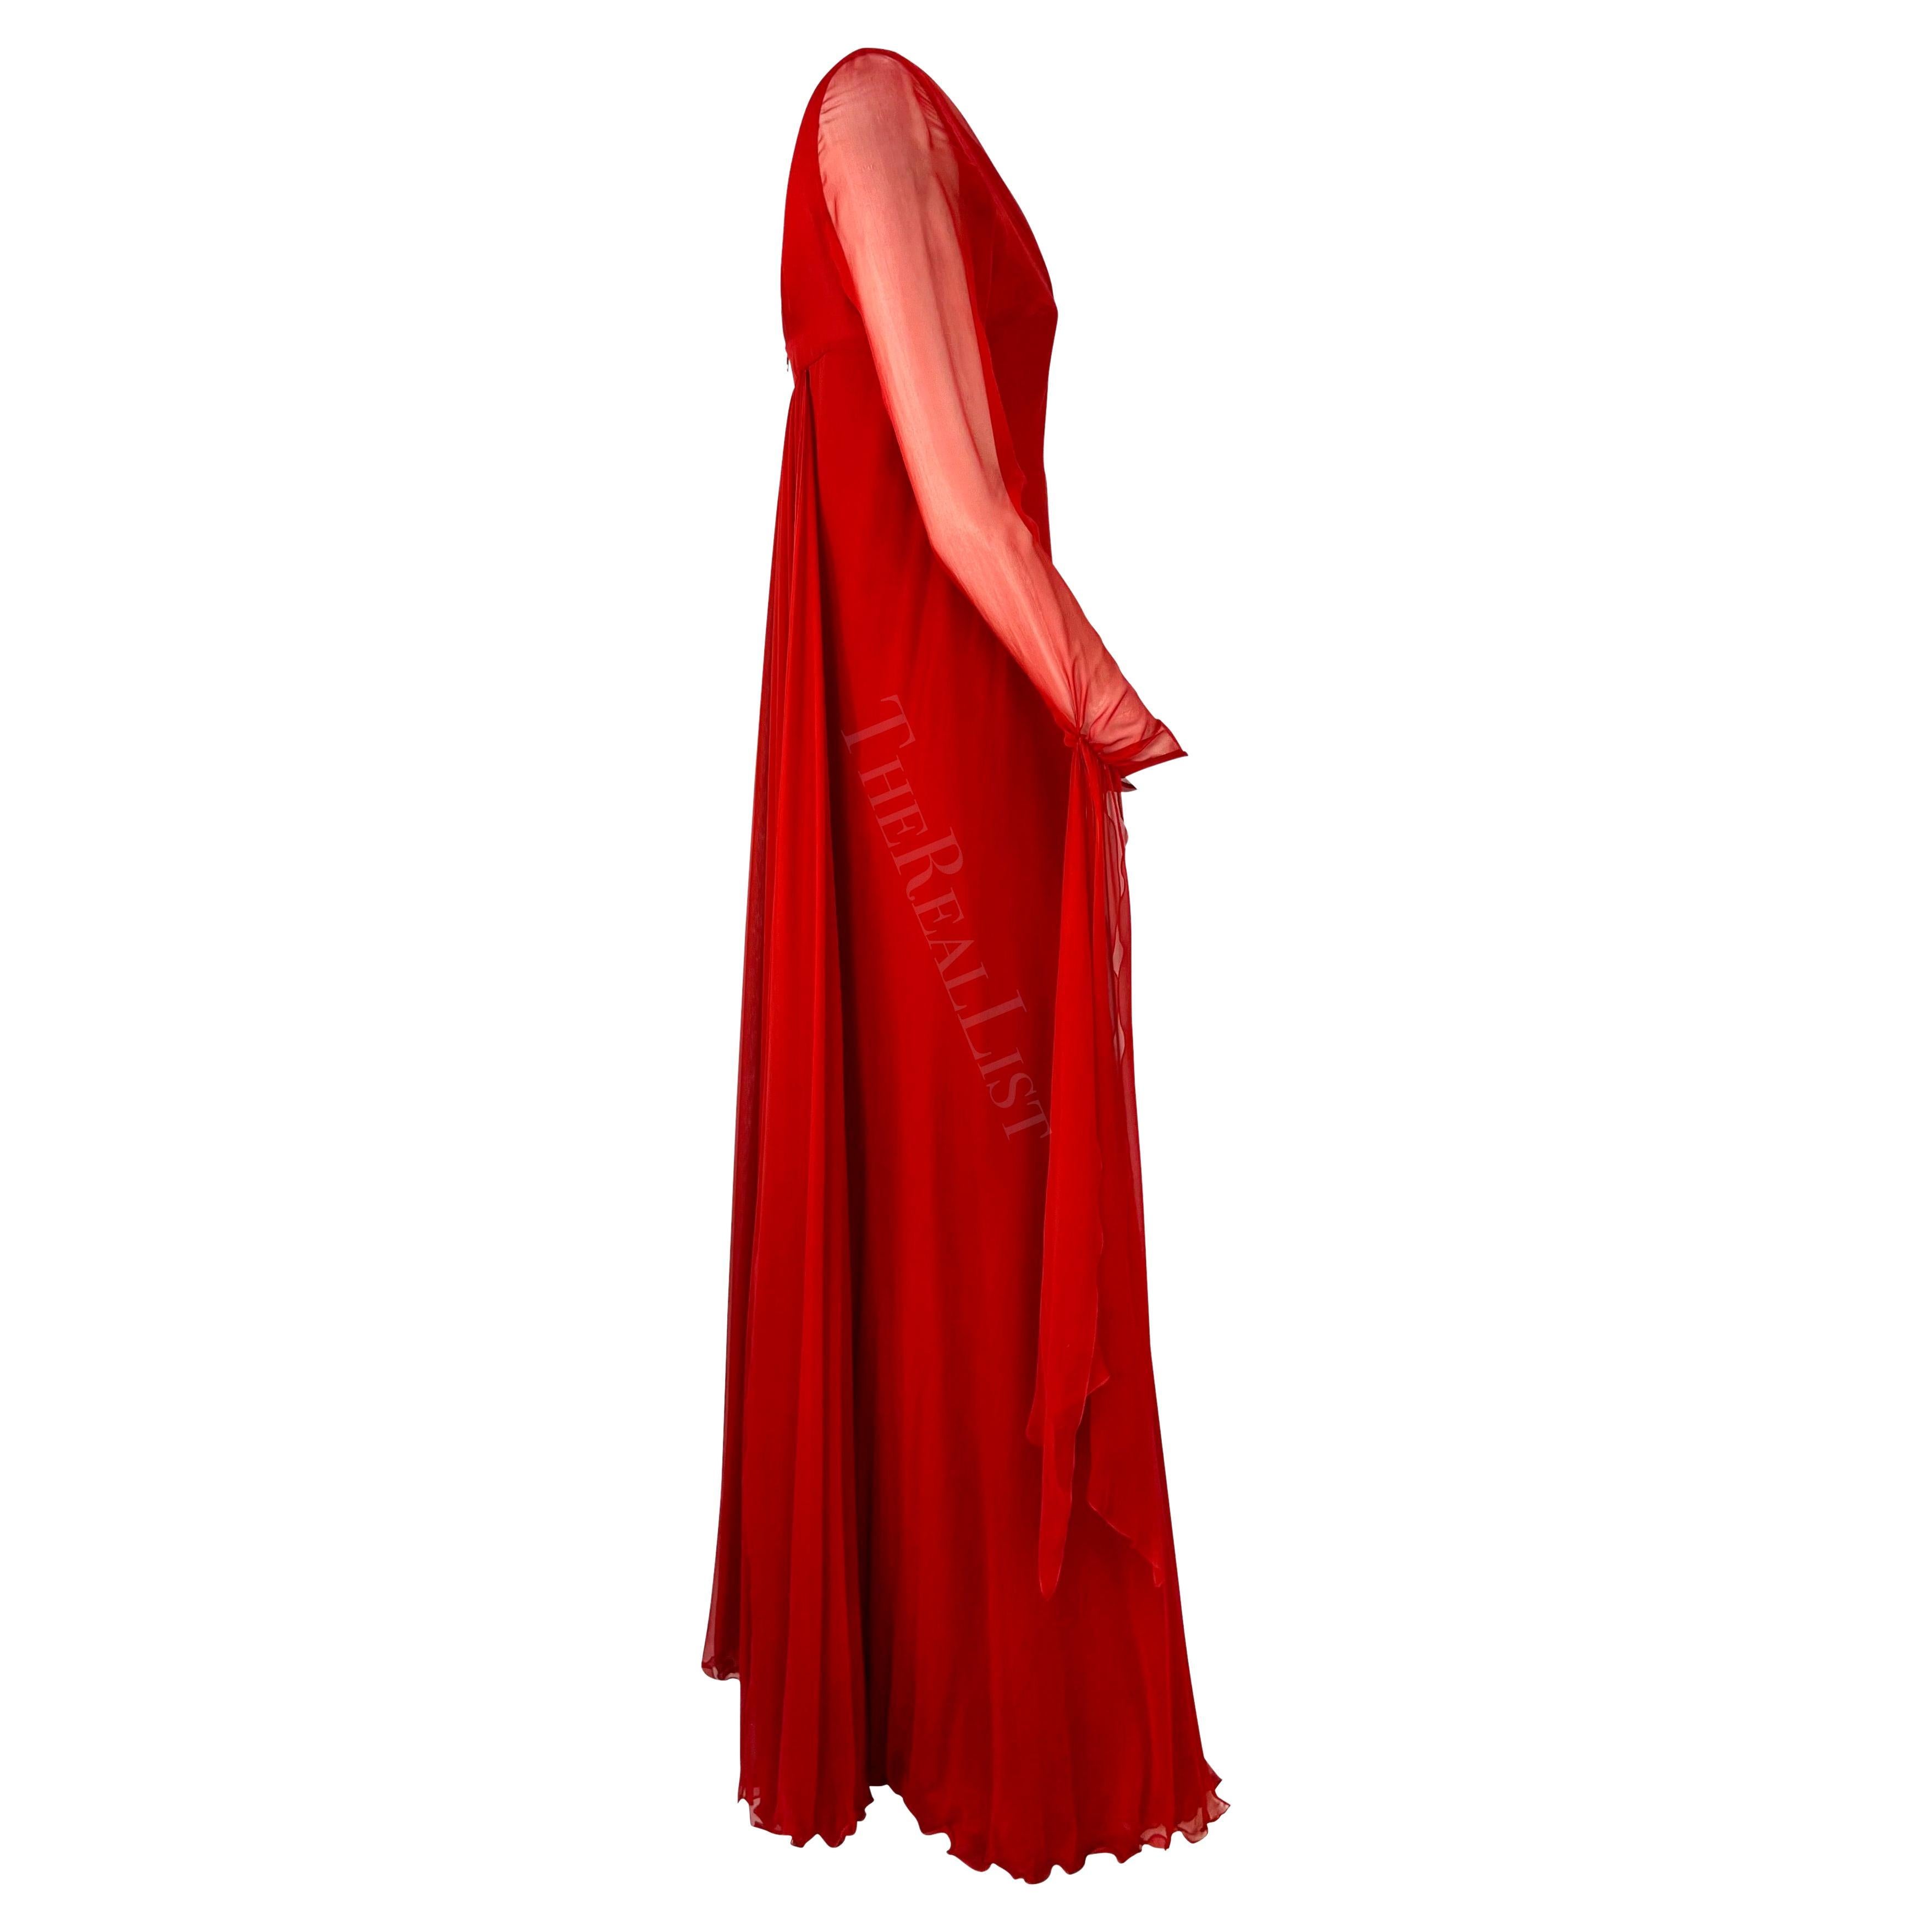 NWT F/W 2002 Valentino Garavani Runway Finale Red Silk Chiffon Train Gown For Sale 8